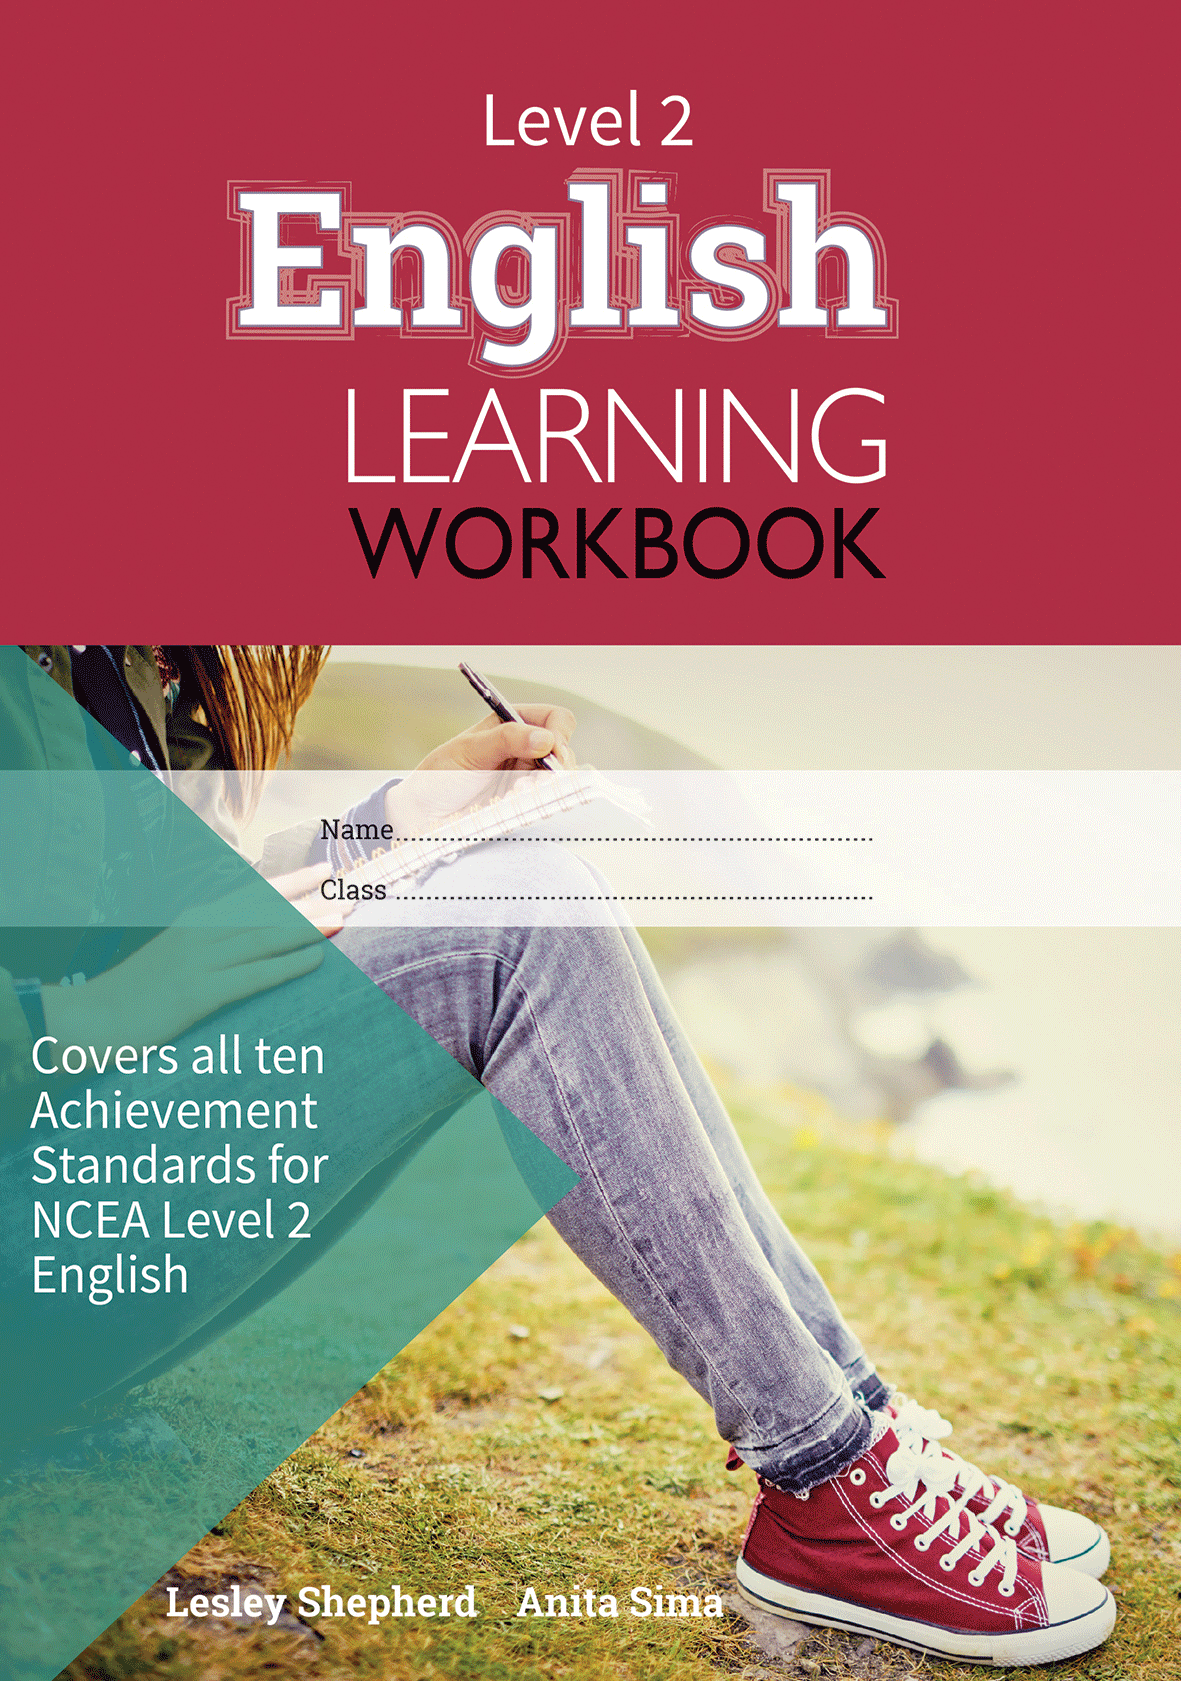 Level 2 English Learning Workbook - LearnWell